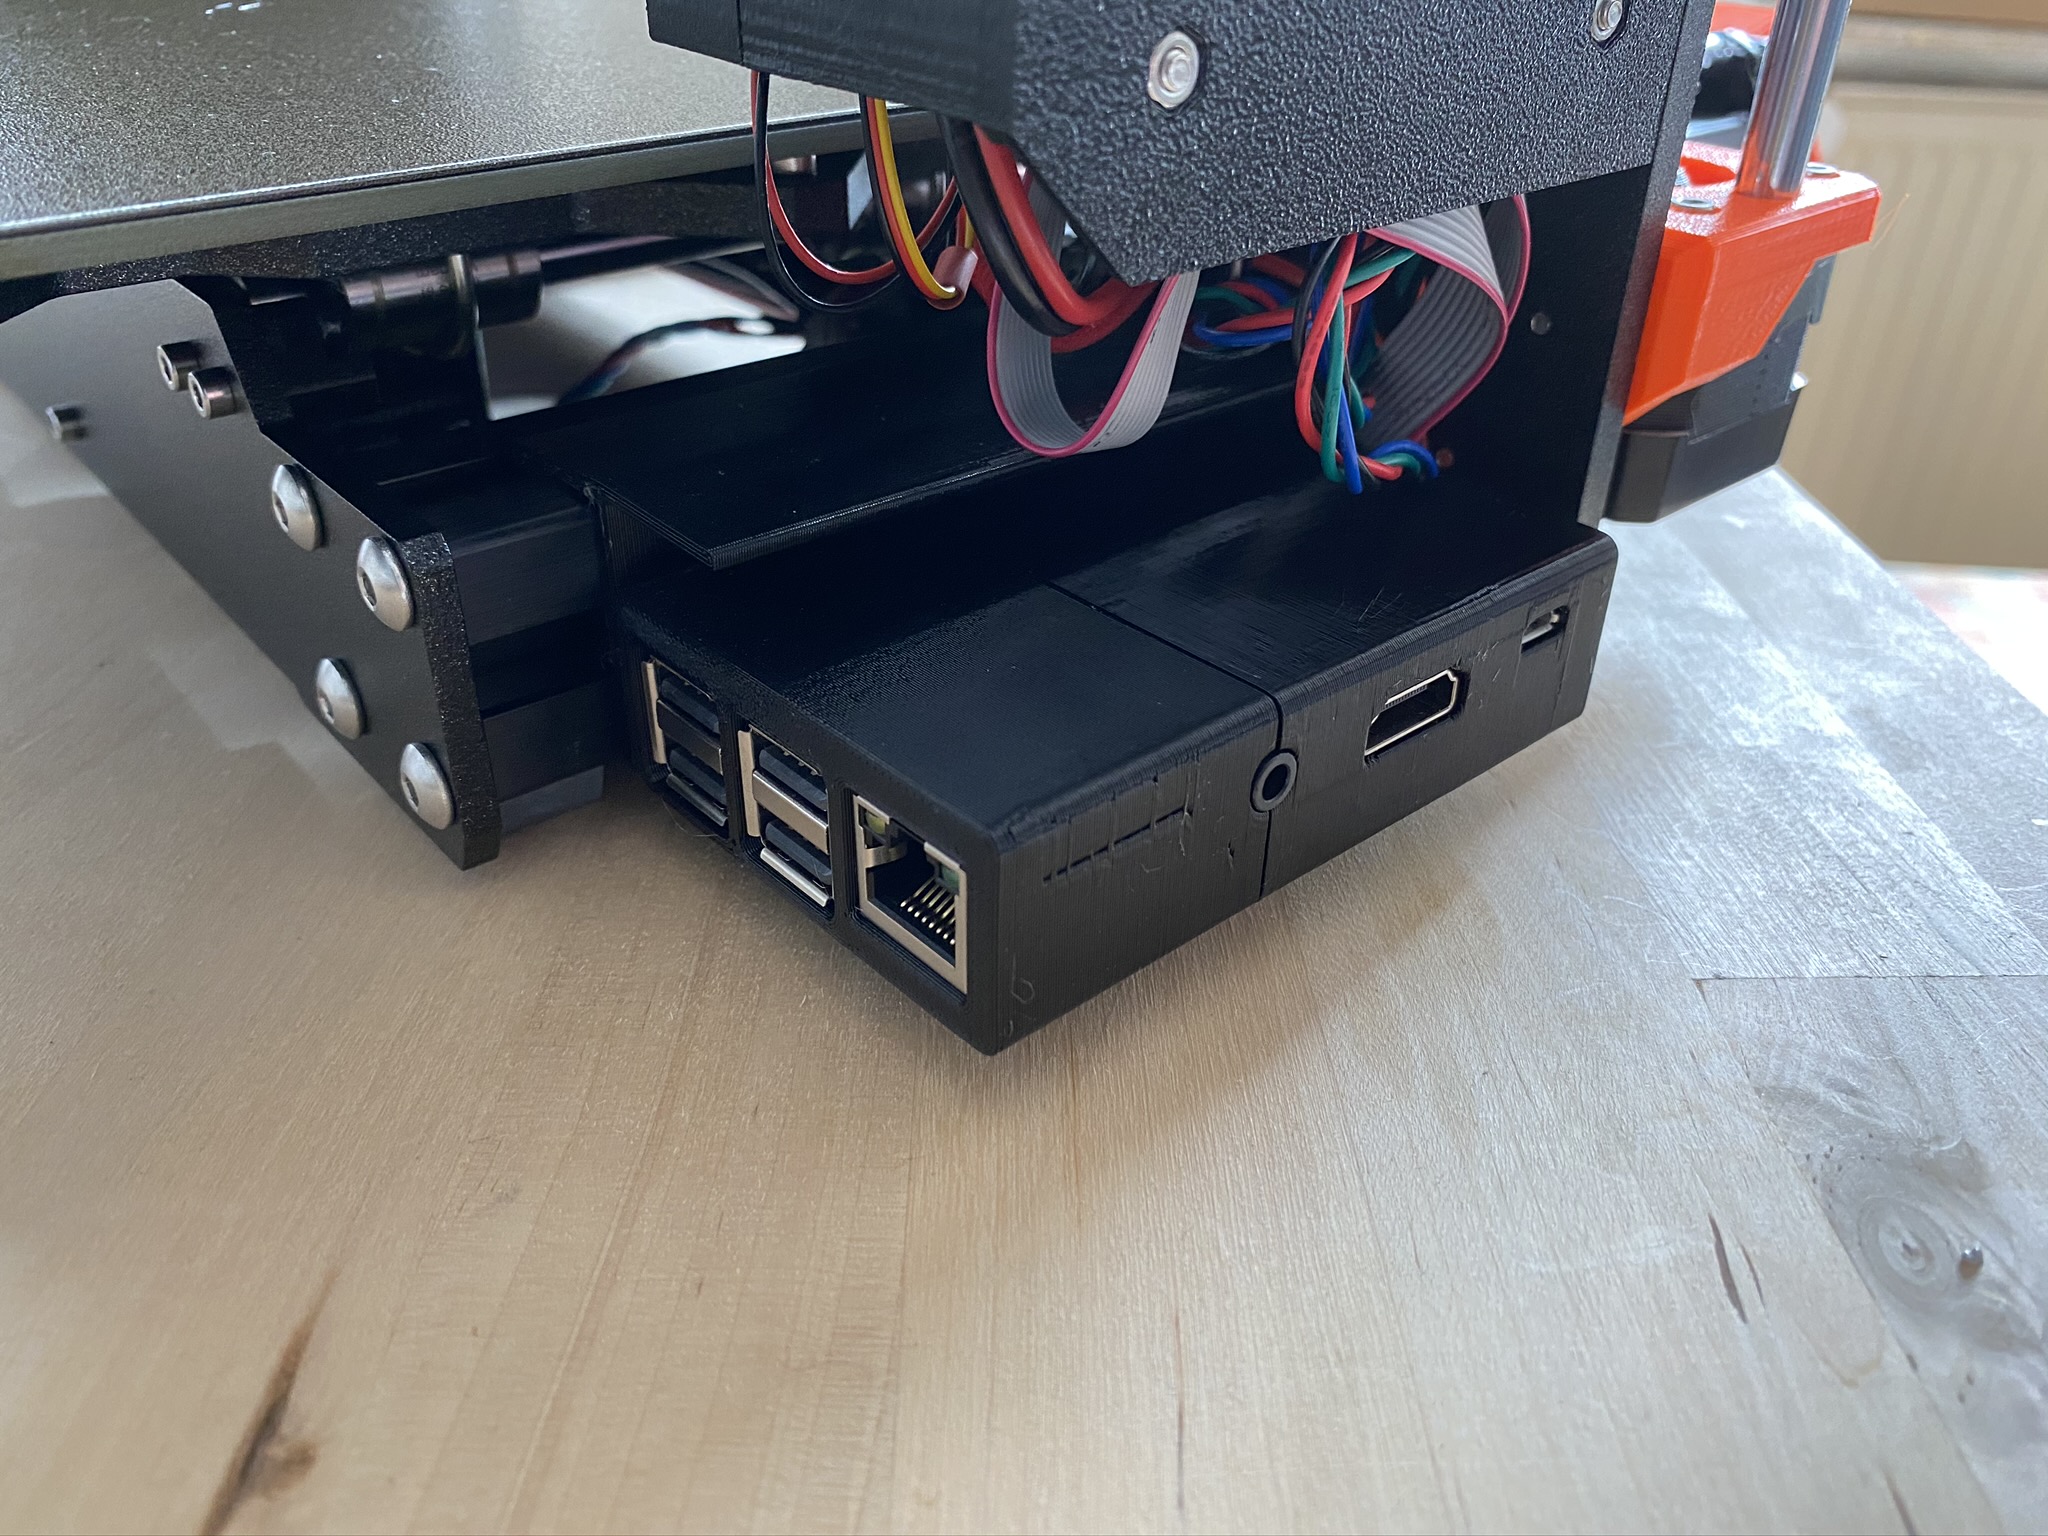 Raspberry Pi 3 toolless clip-on case Prusa i3 MK3/S